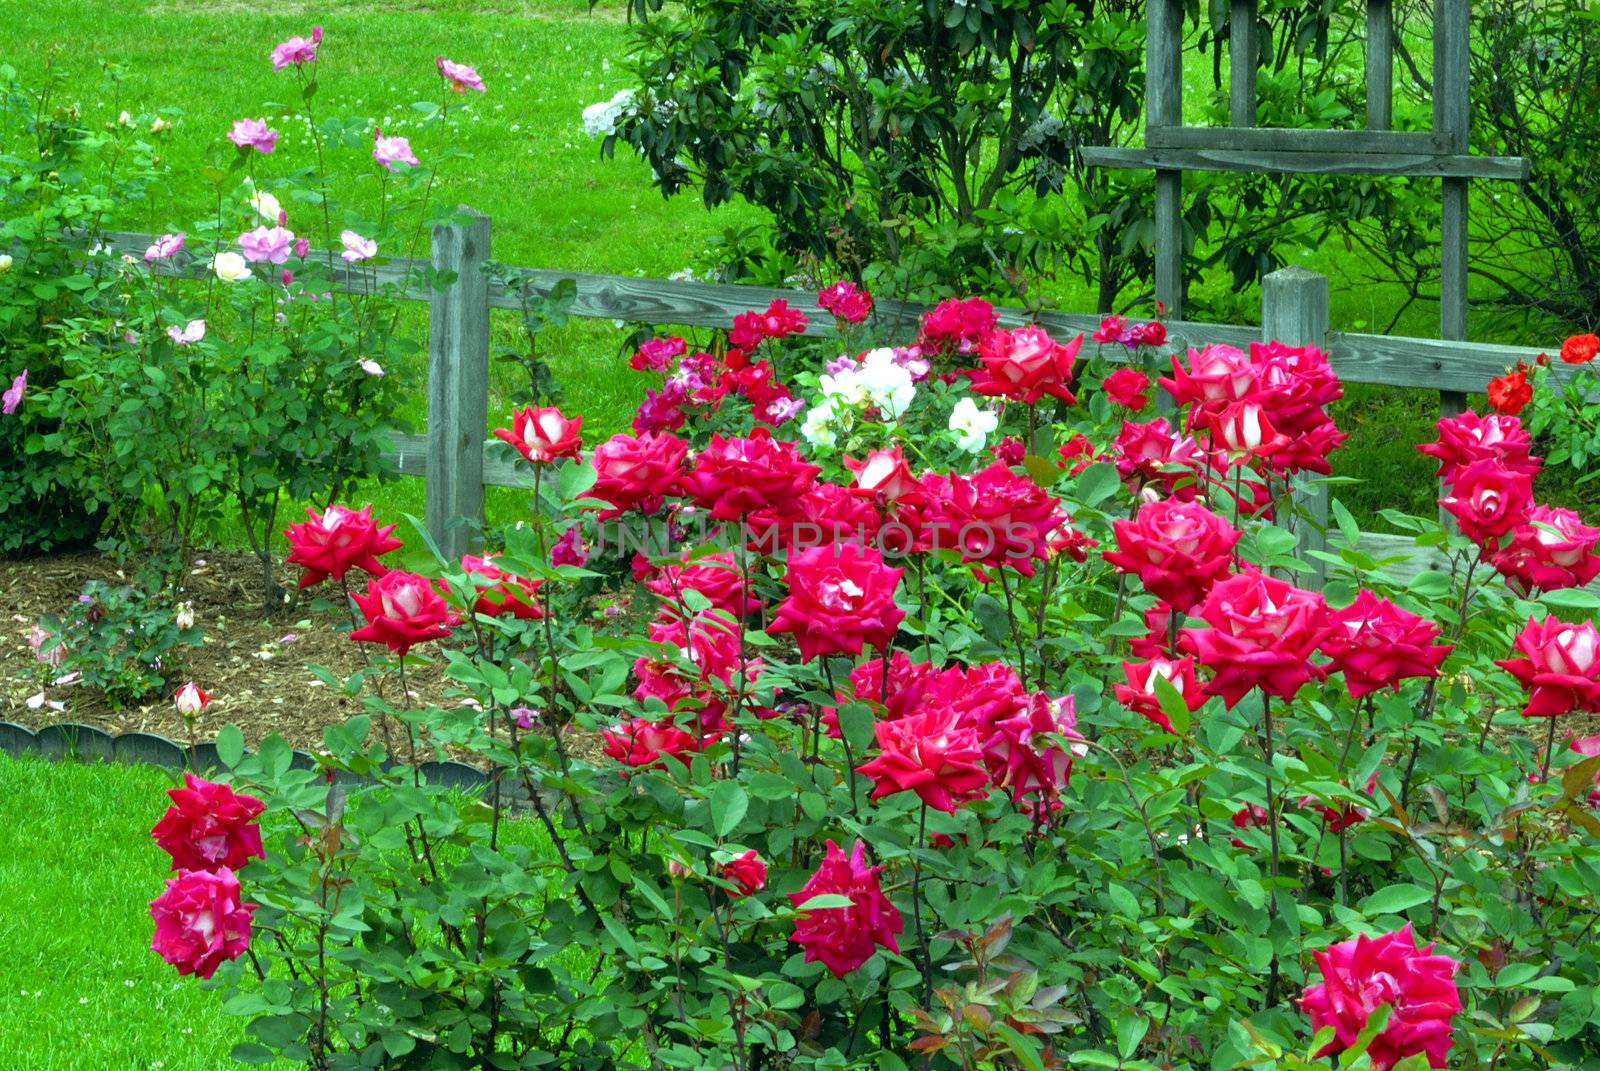 Roses at bloom at a local rose park